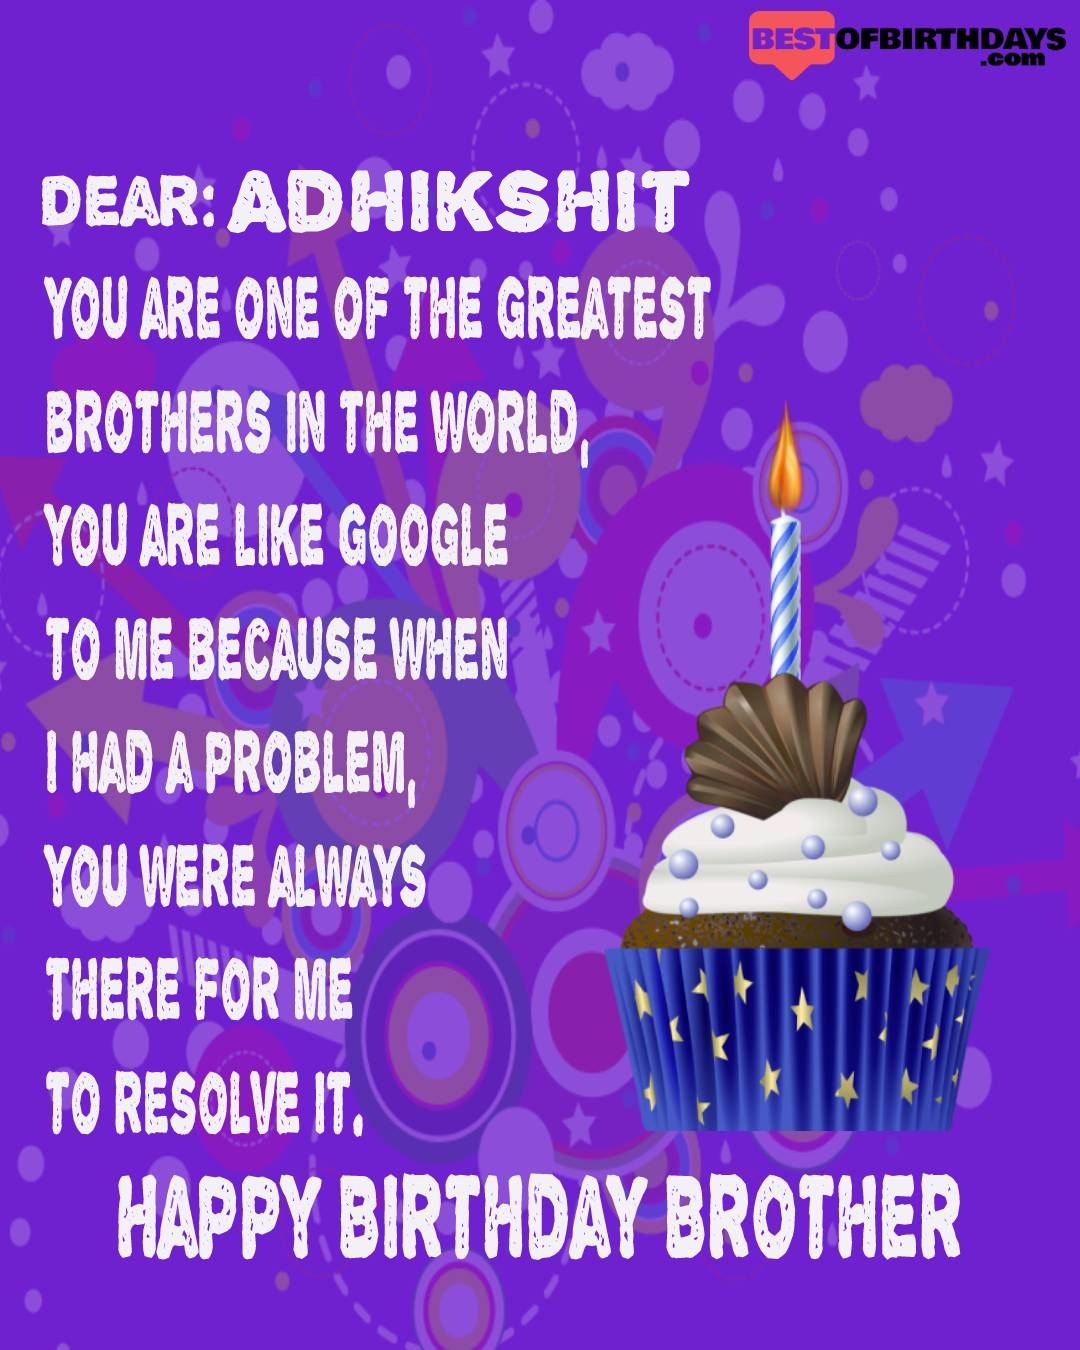 Happy birthday adhikshit bhai brother bro